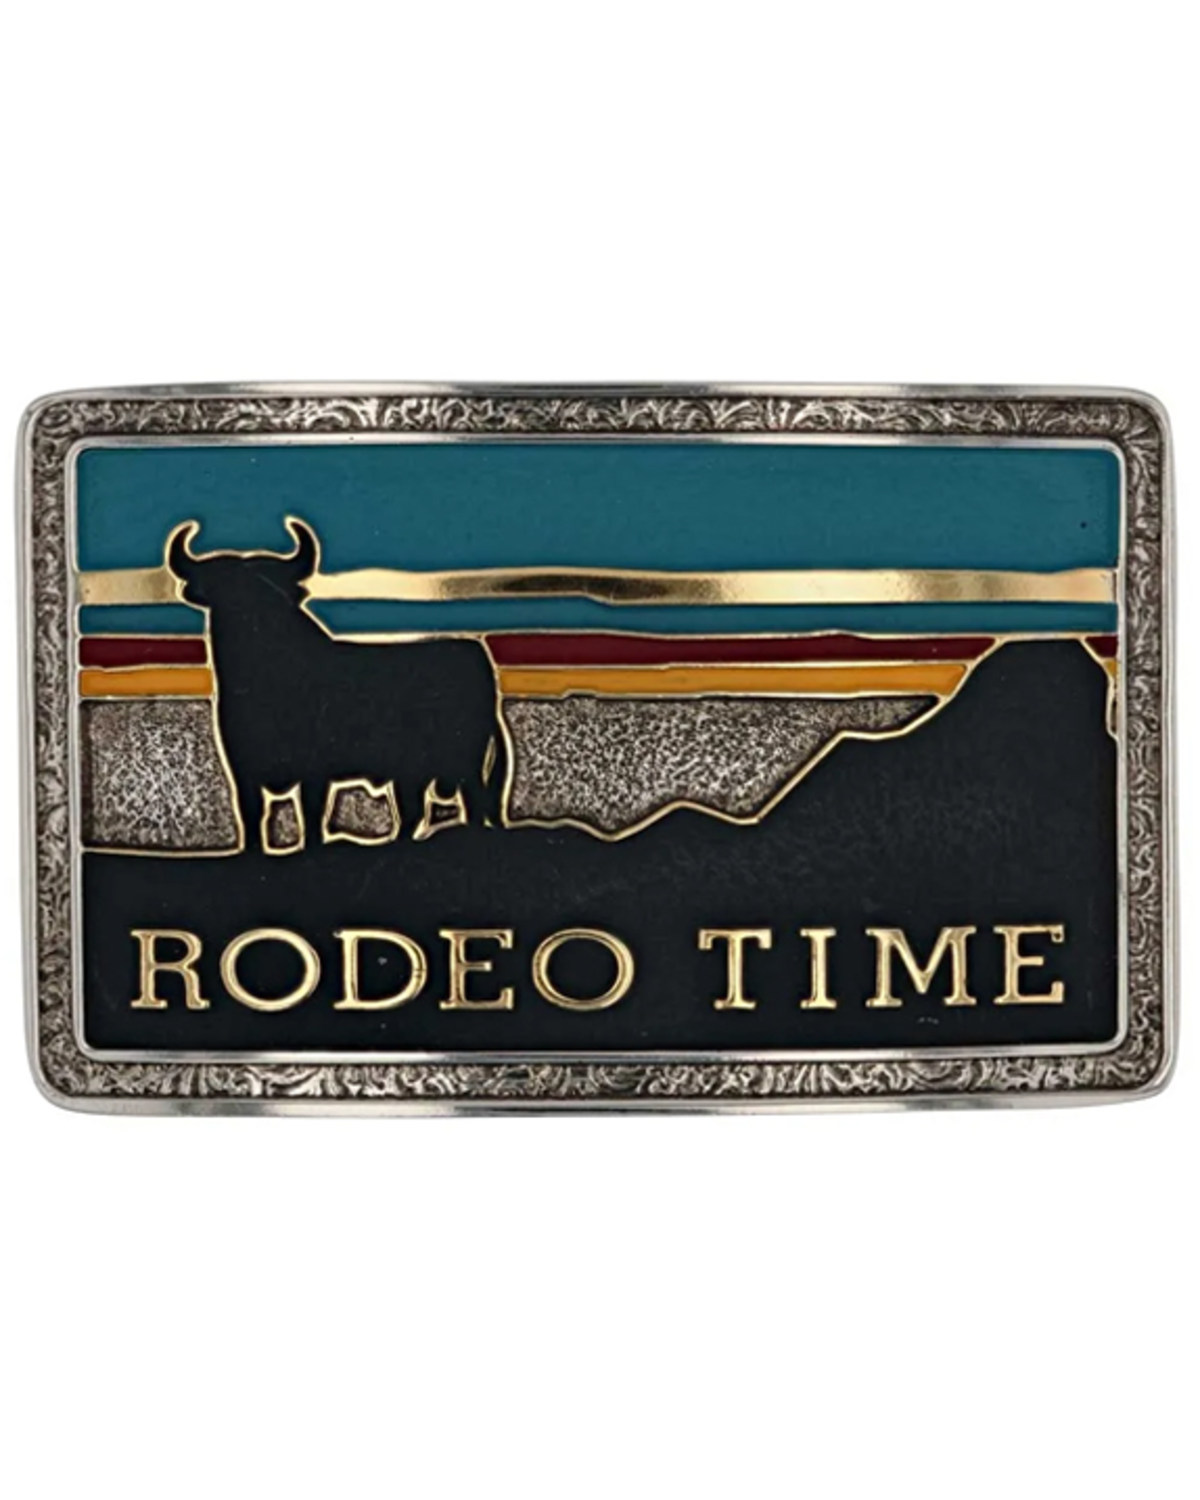 Montana Silversmiths Rodeo Time Southwestern Attitude Belt Buckle